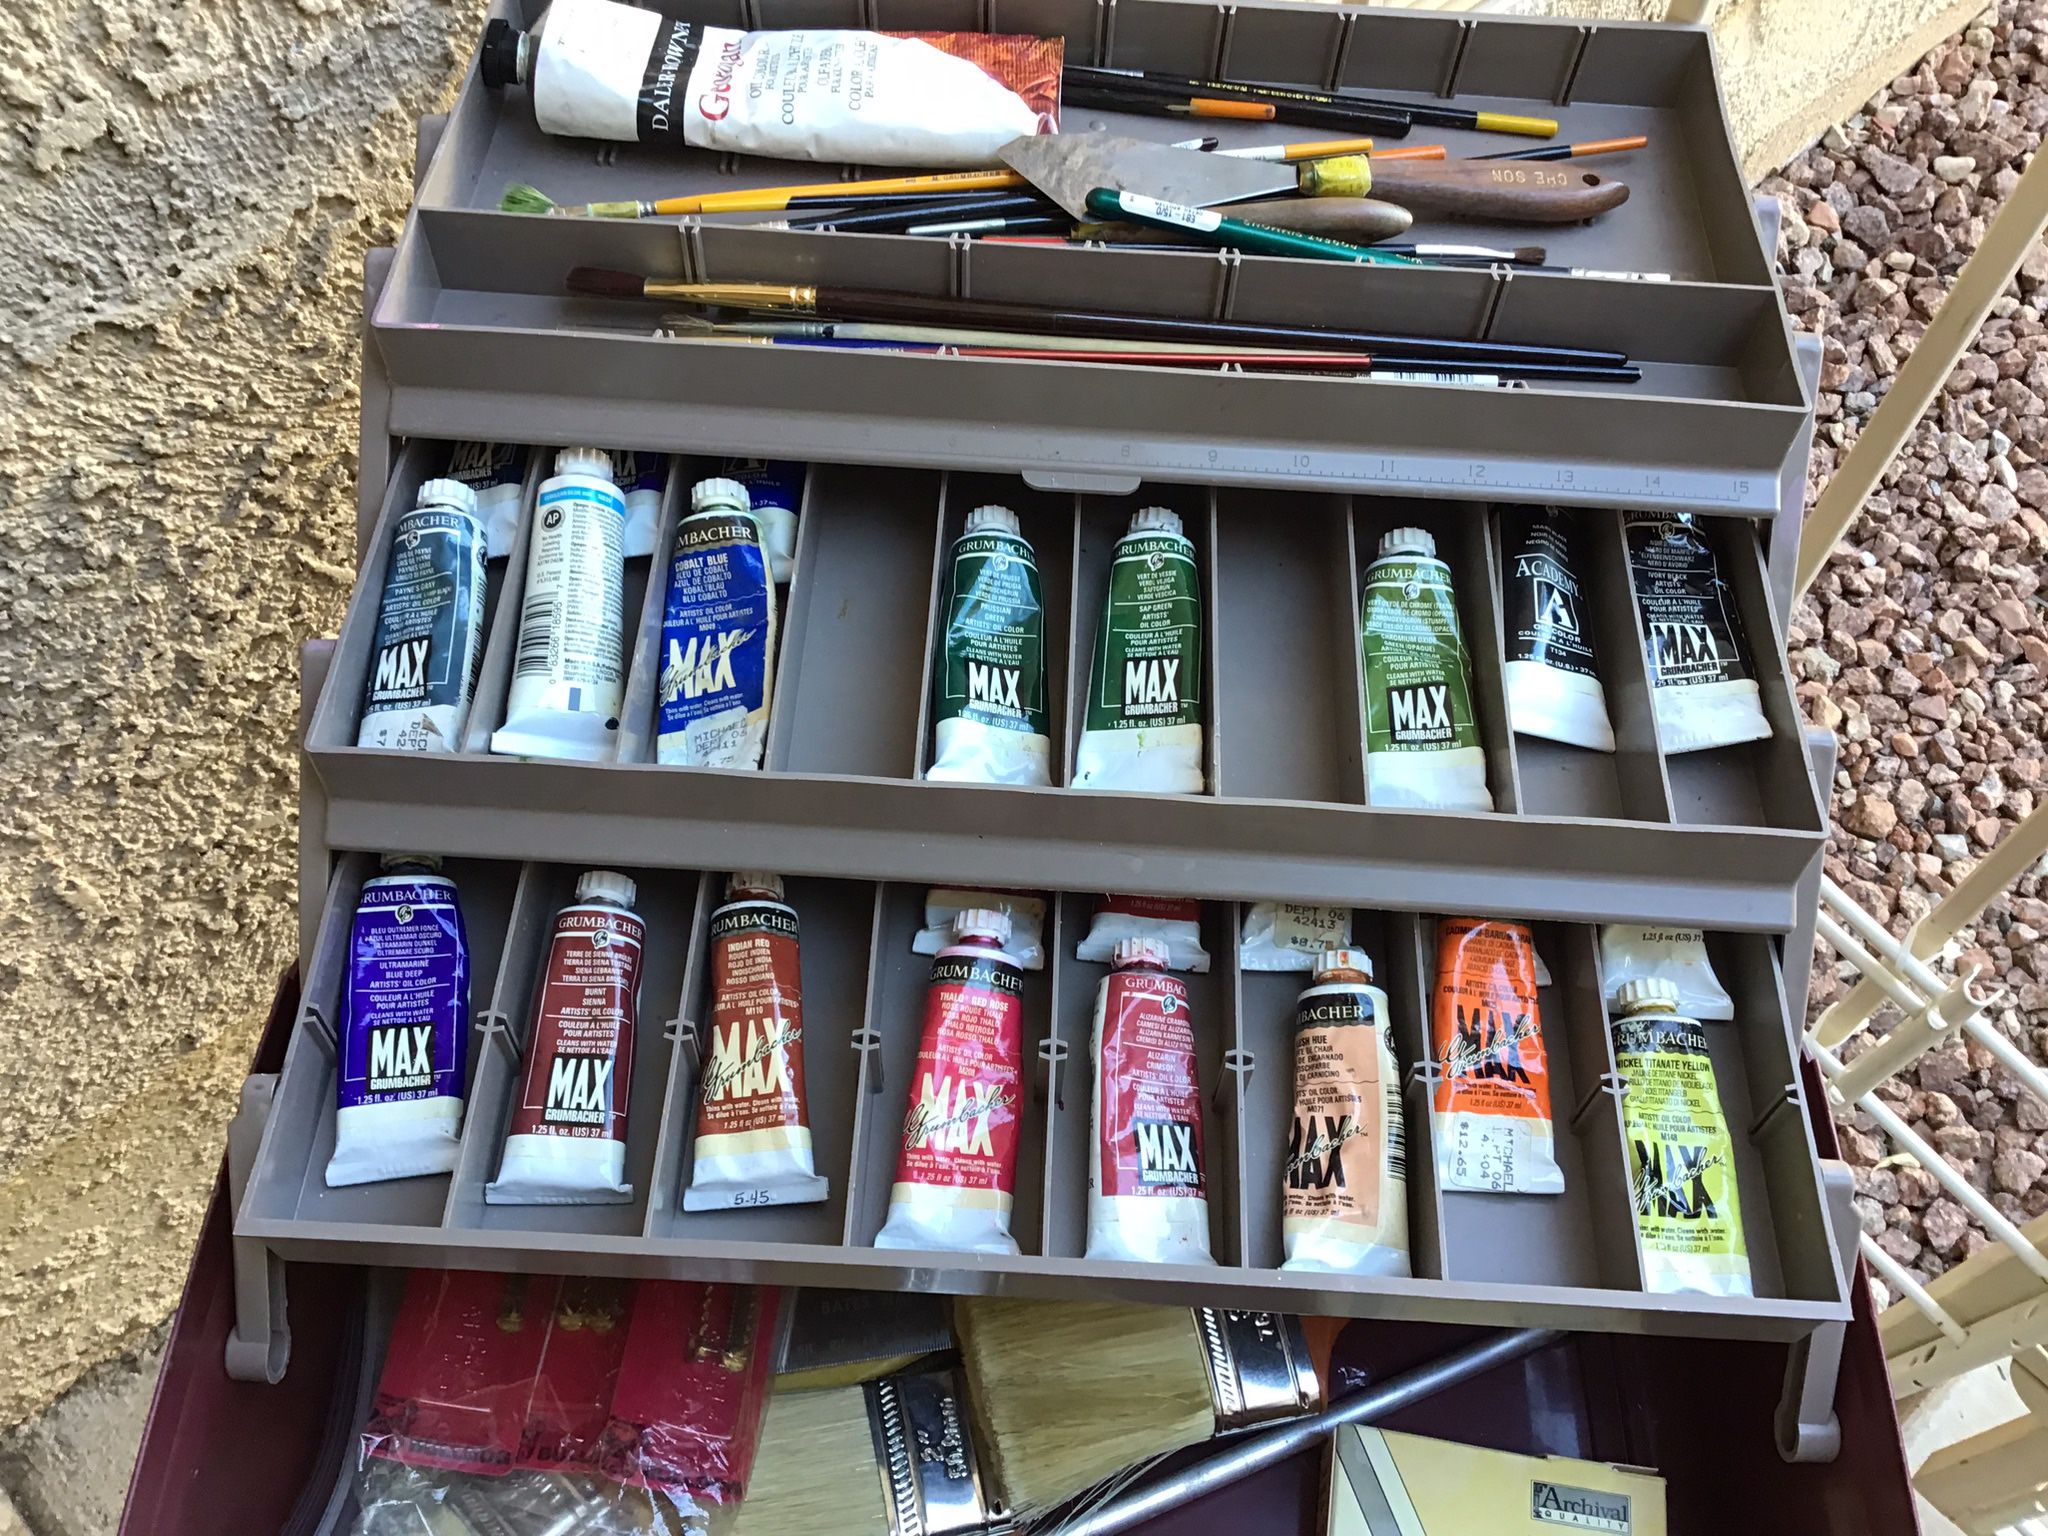 Oil Paints & Brushes